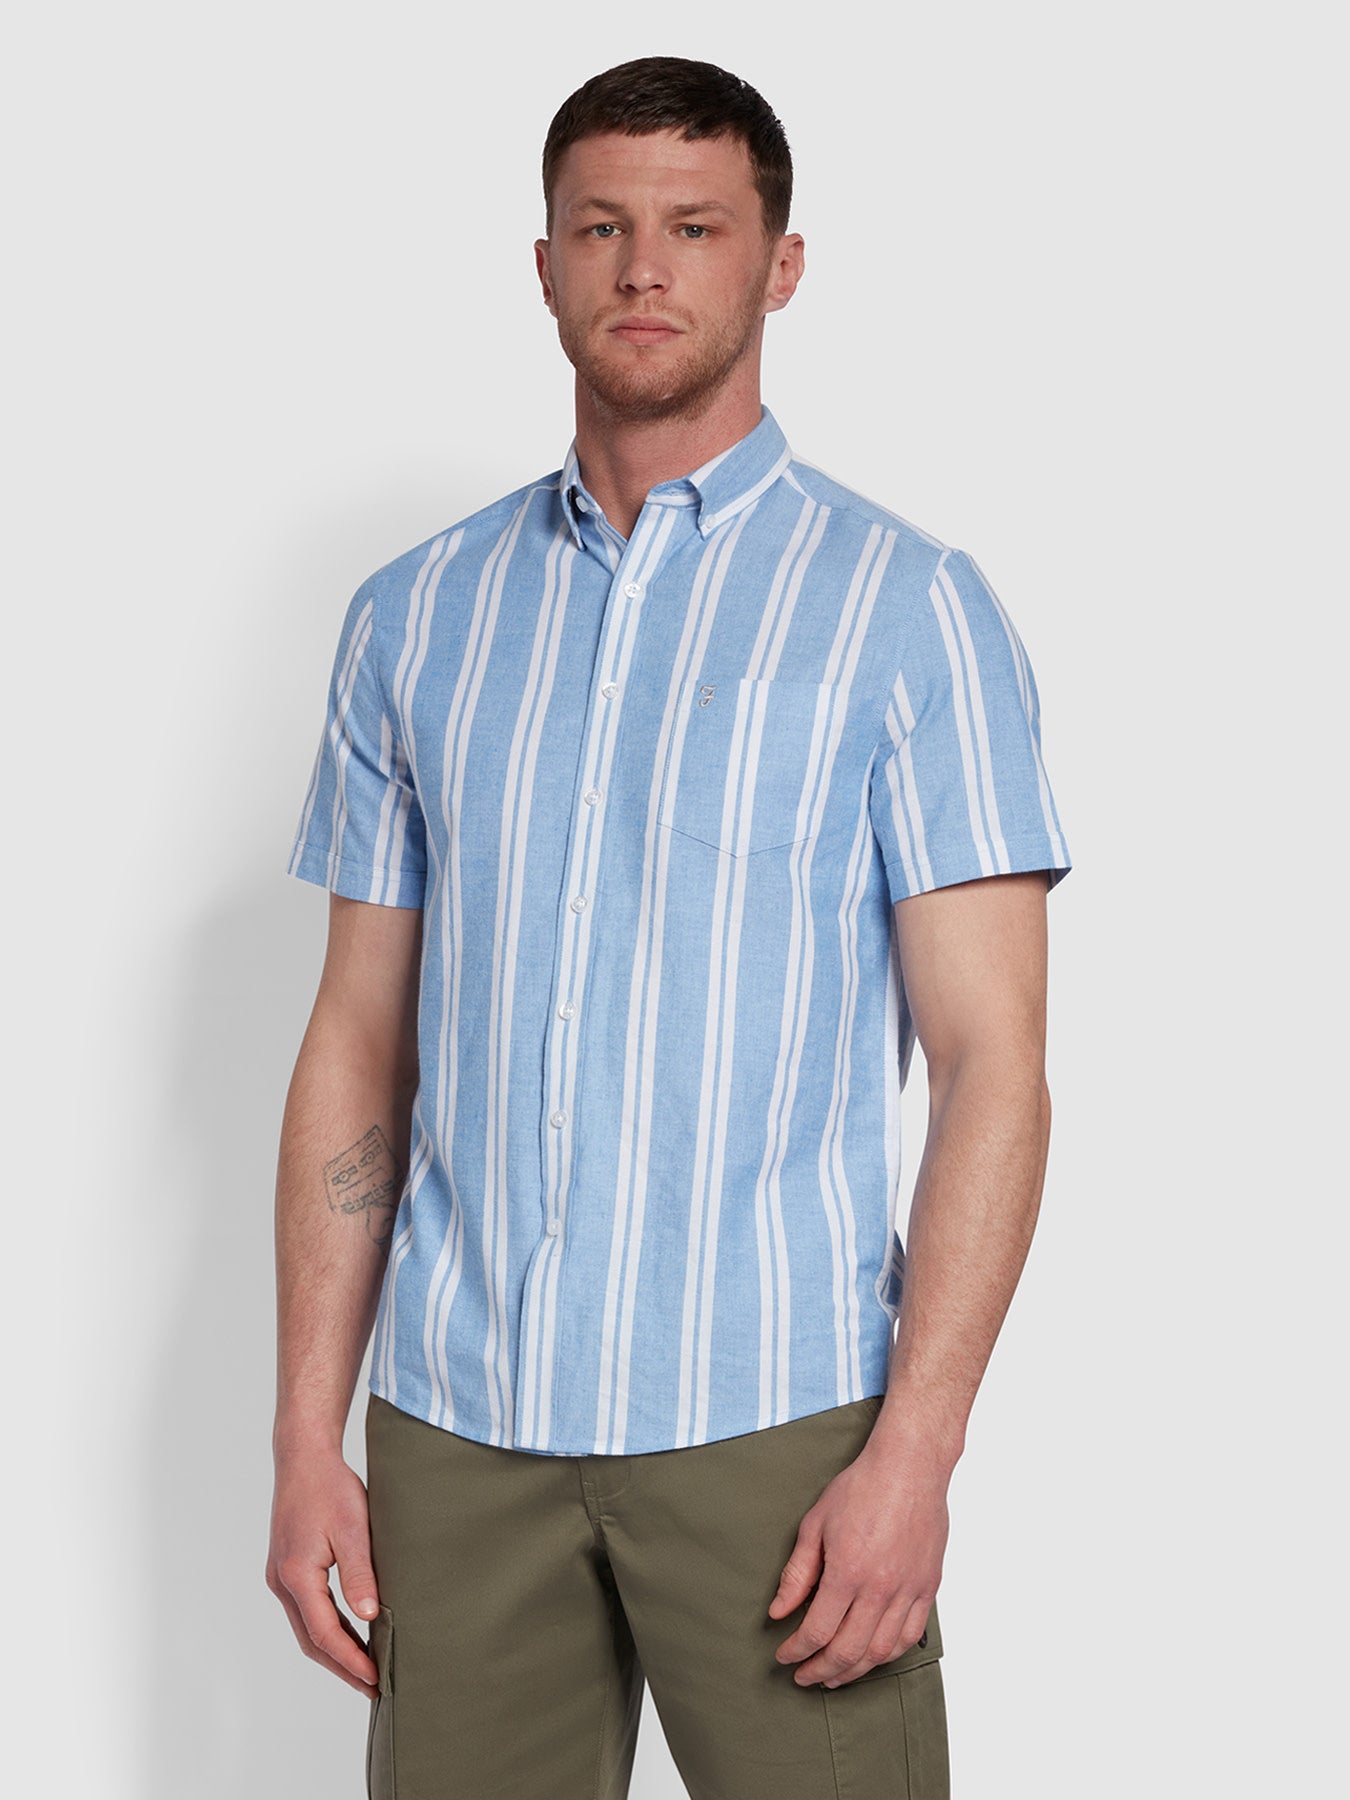 View Drayton Modern Fit Stripe Shirt In Regatta Blue information